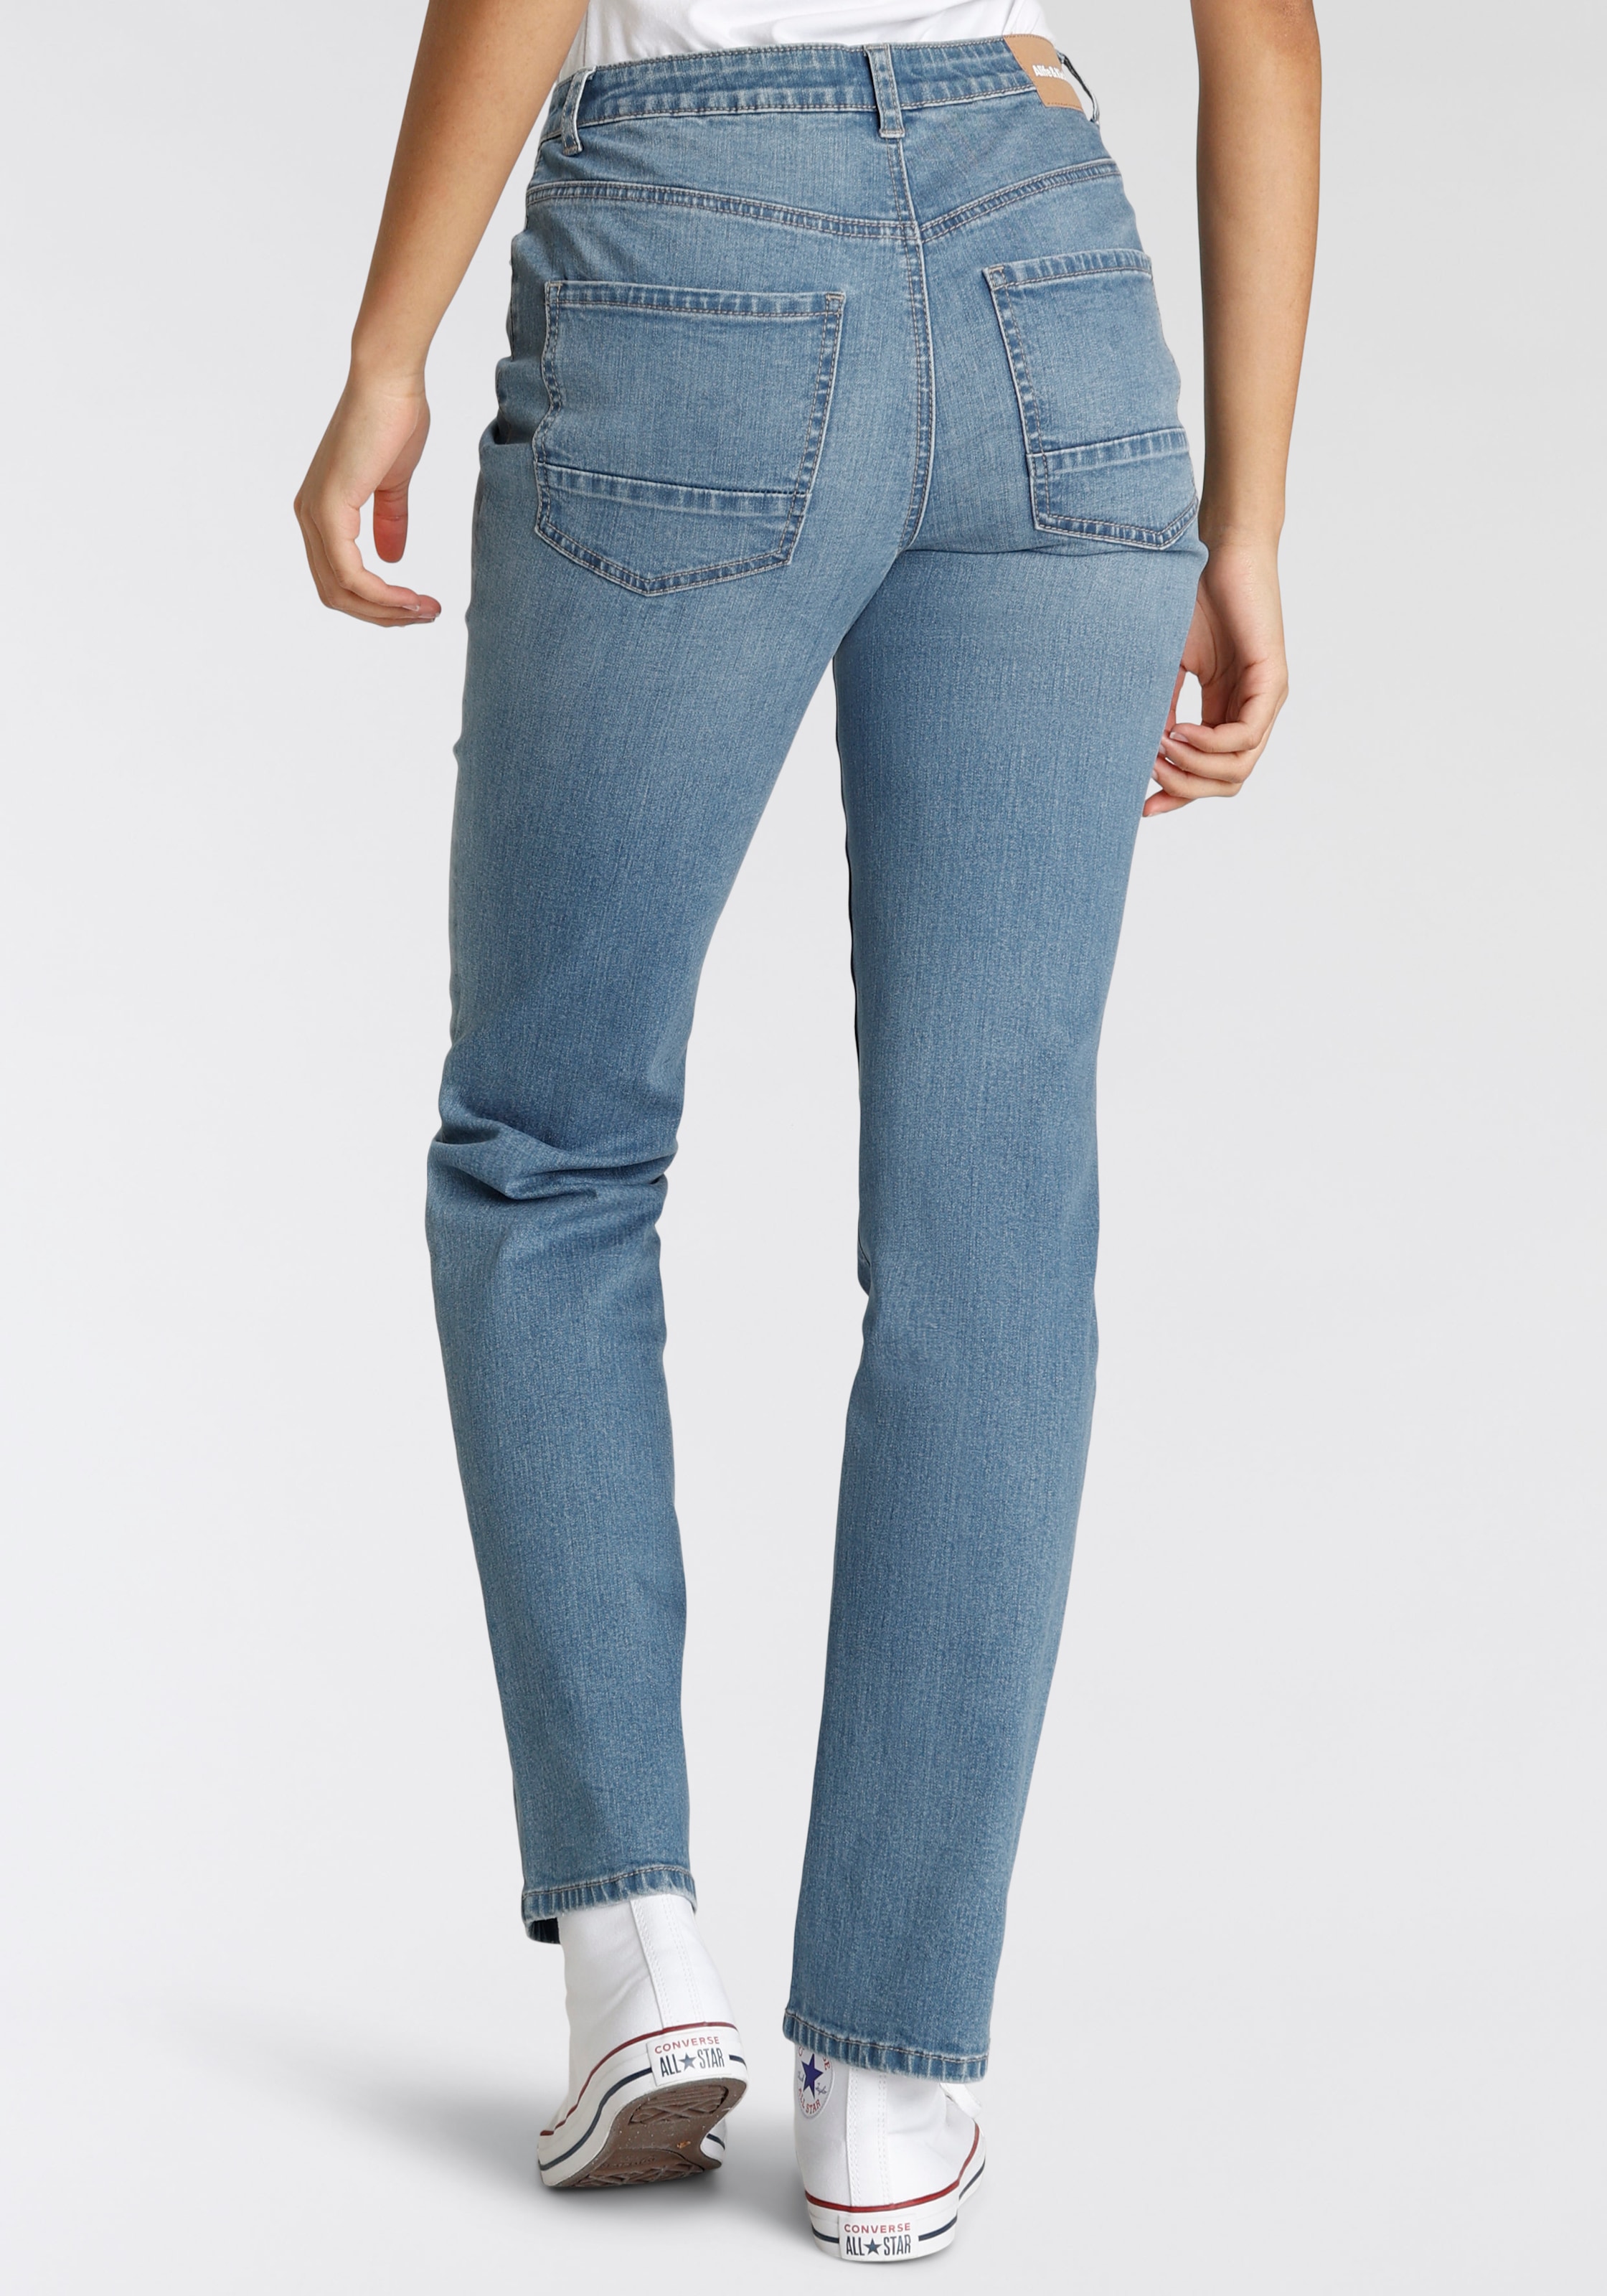 High-waist-Jeans NEUE AileenAK«, & »Straight-Fit im KOLLEKTION Kickin Online-Shop Alife bestellen